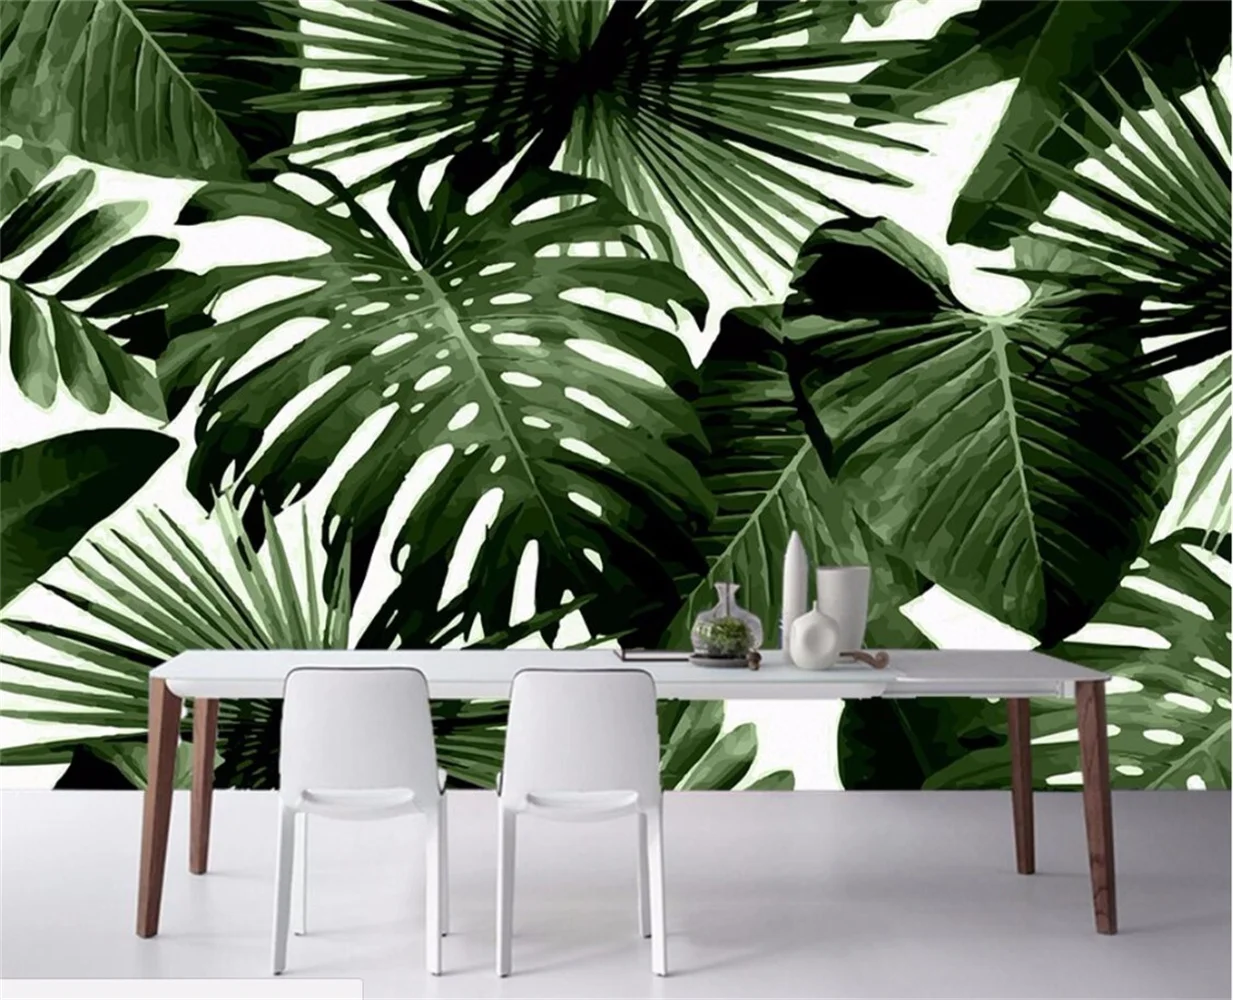 

beibehang Custom Photo Wallpaper Retro Tropical Rain Forest Palm Banana Leaves 3D Wall Mural Cafe Restaurant Theme Hotel Backdro